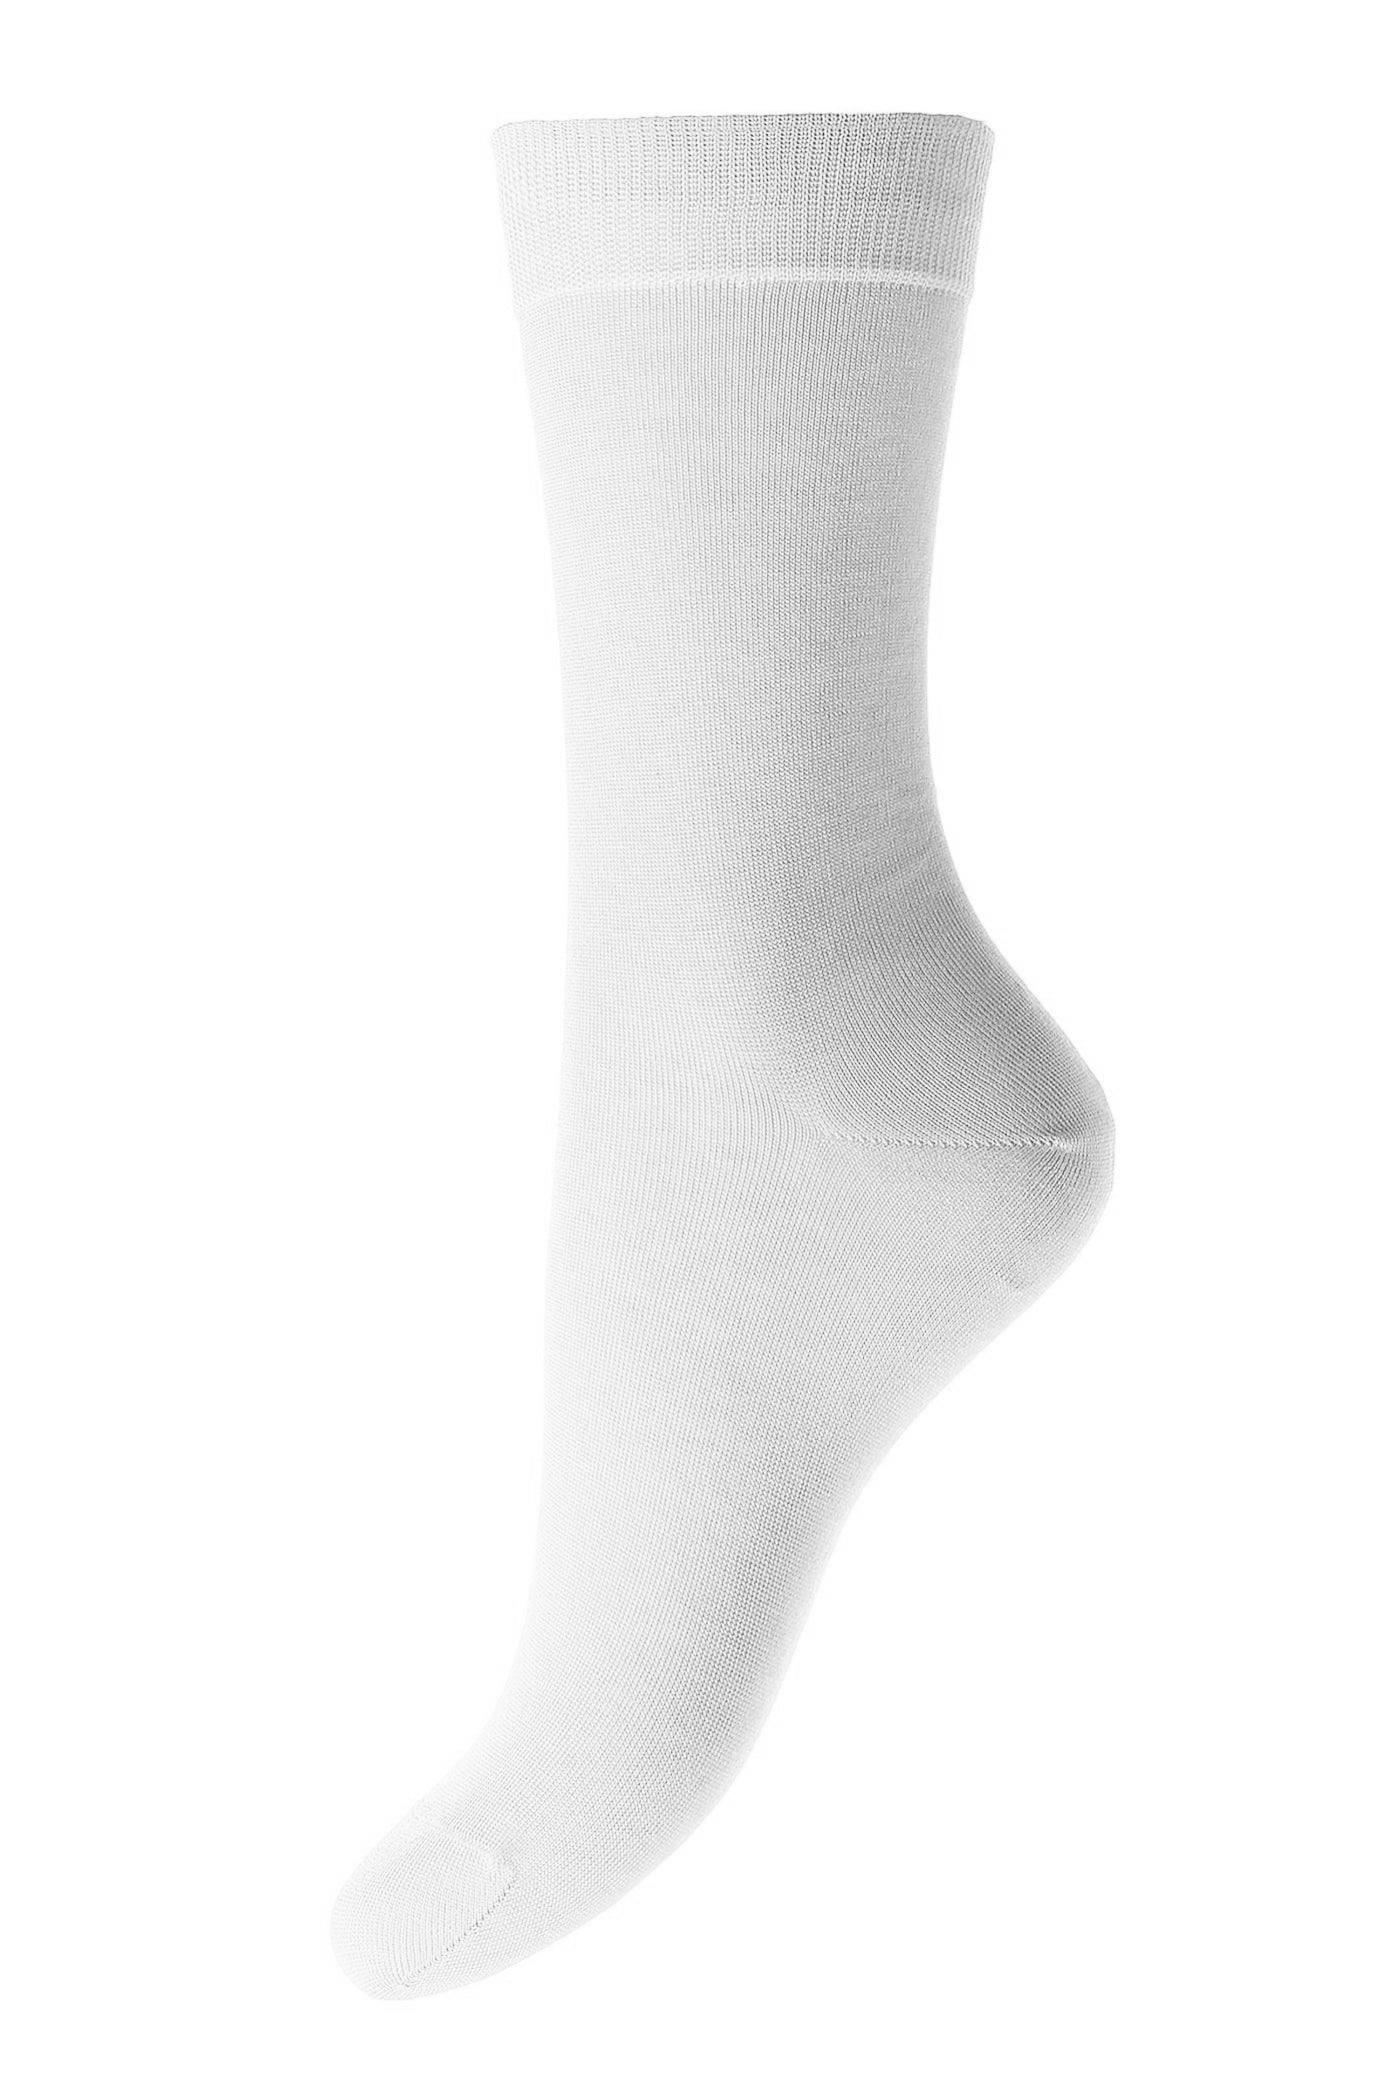 Pantherella, Poppy - Ladies' Flat Knit Ankle Sock - Egyptian Cotton Wh -  Solespun